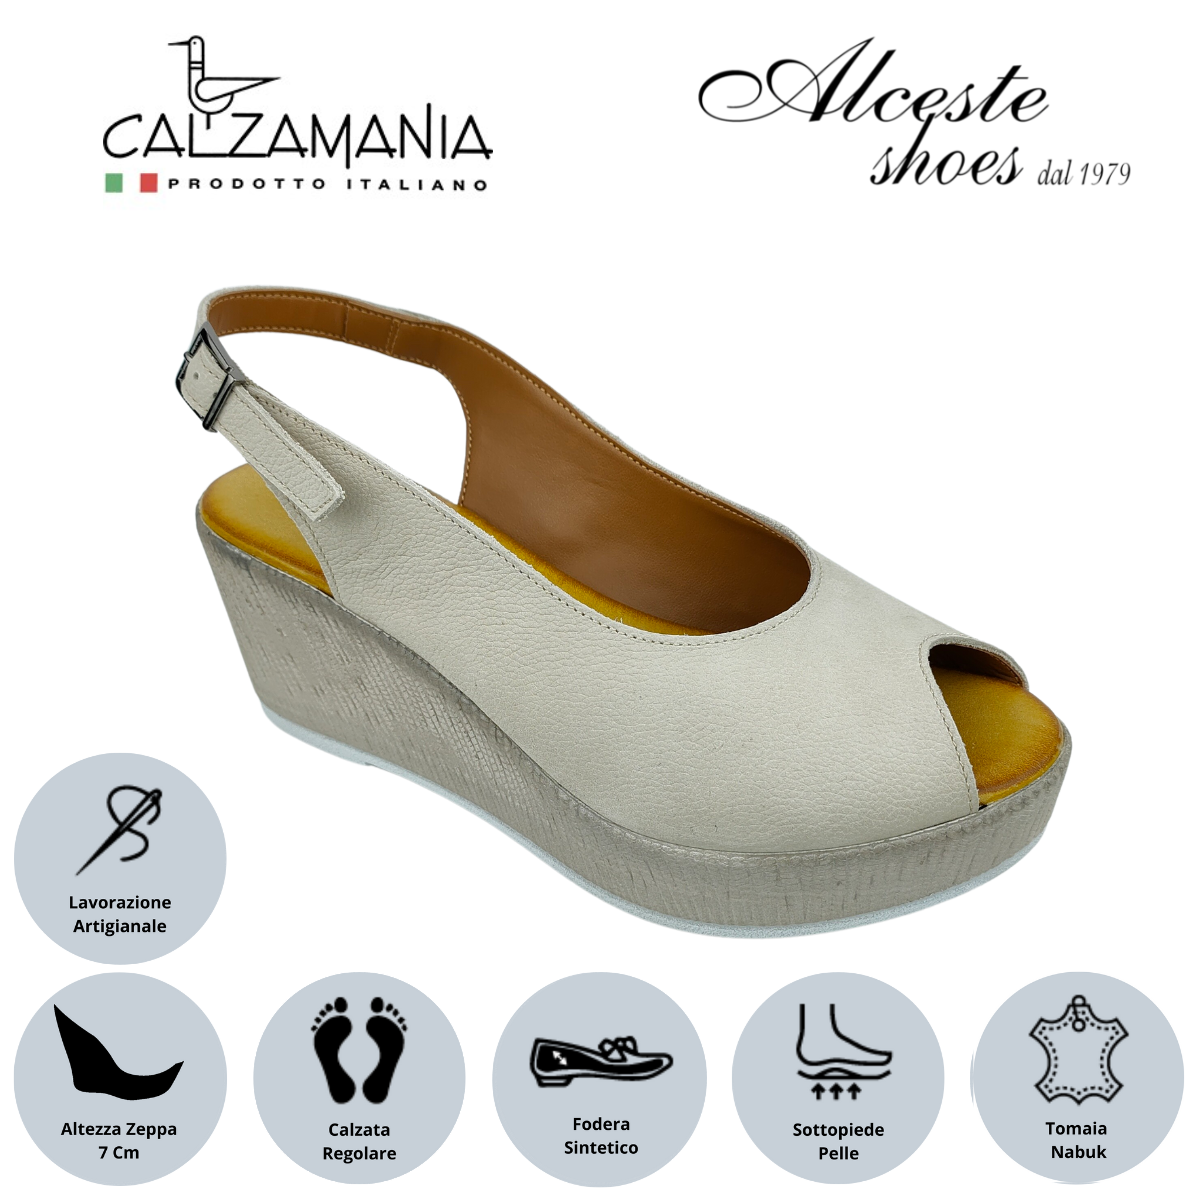 Sandalo con Zeppa "Calzamania" Art. 24239 Nabuk Beige Alceste Shoes 2